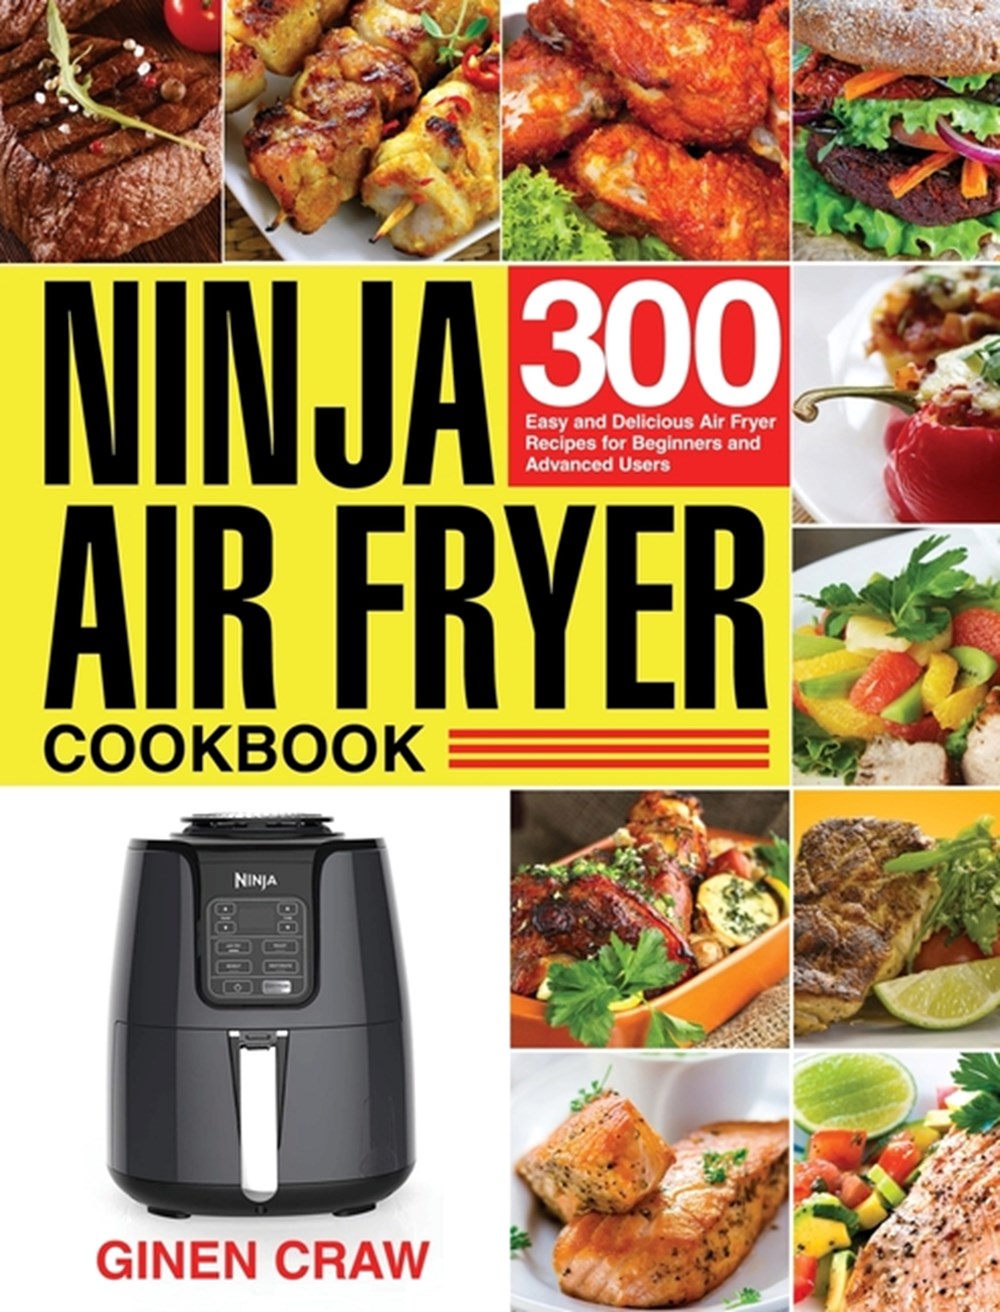 Buy Ninja Air Fryer Cookbook 300 Easy and Delicious Air Fryer Recipes